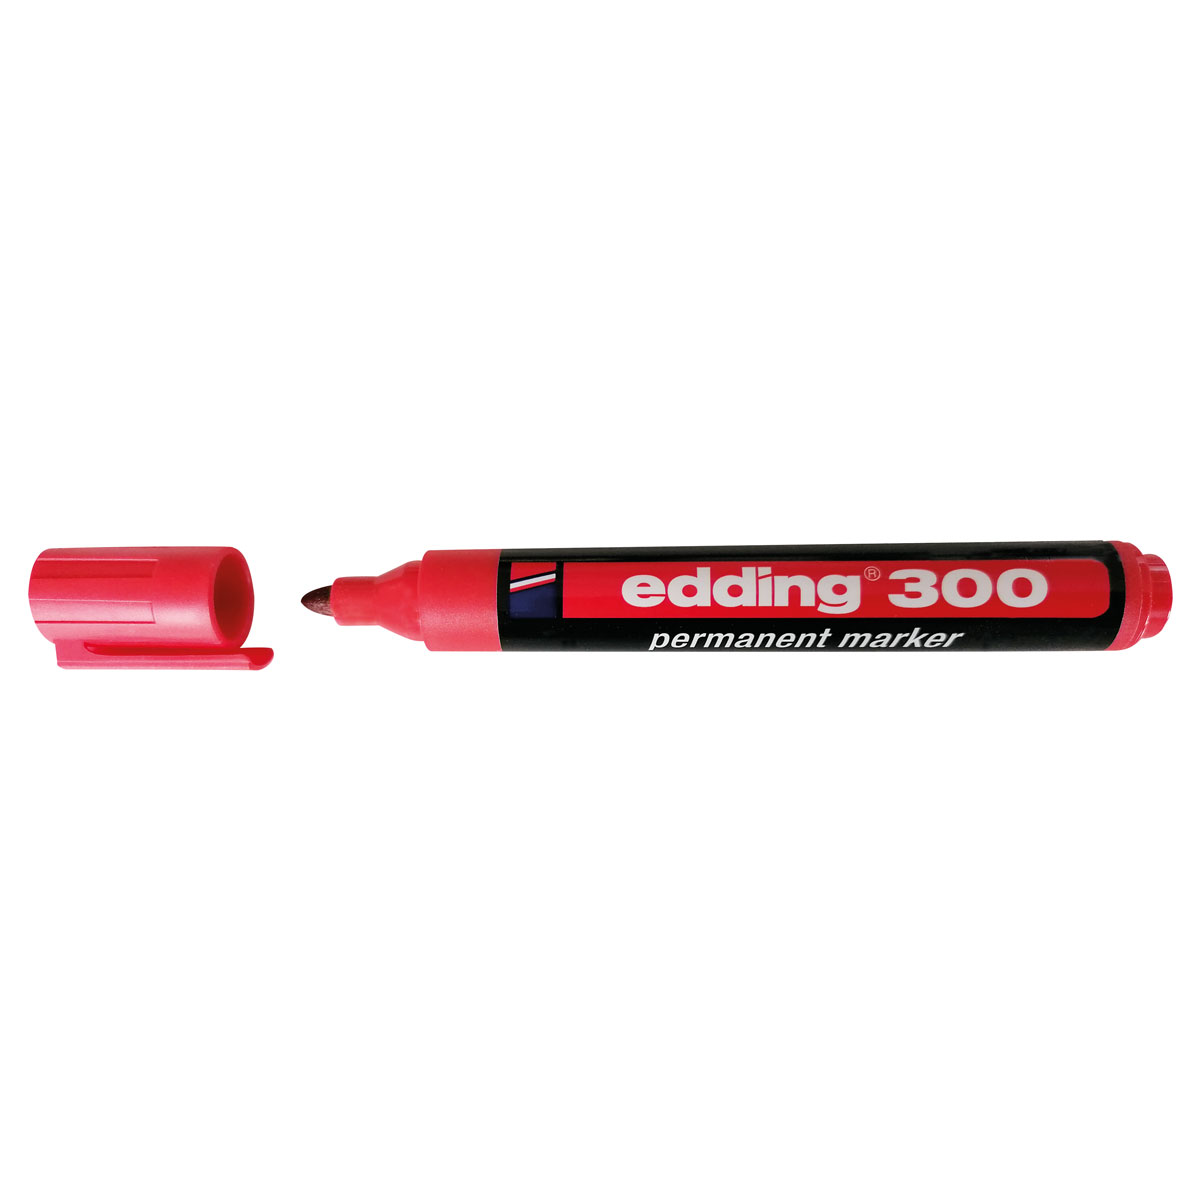 Permanentmarker Edding 300, rot Rundspitze 1,5 - 3 mm, Kunststoffgehäuse